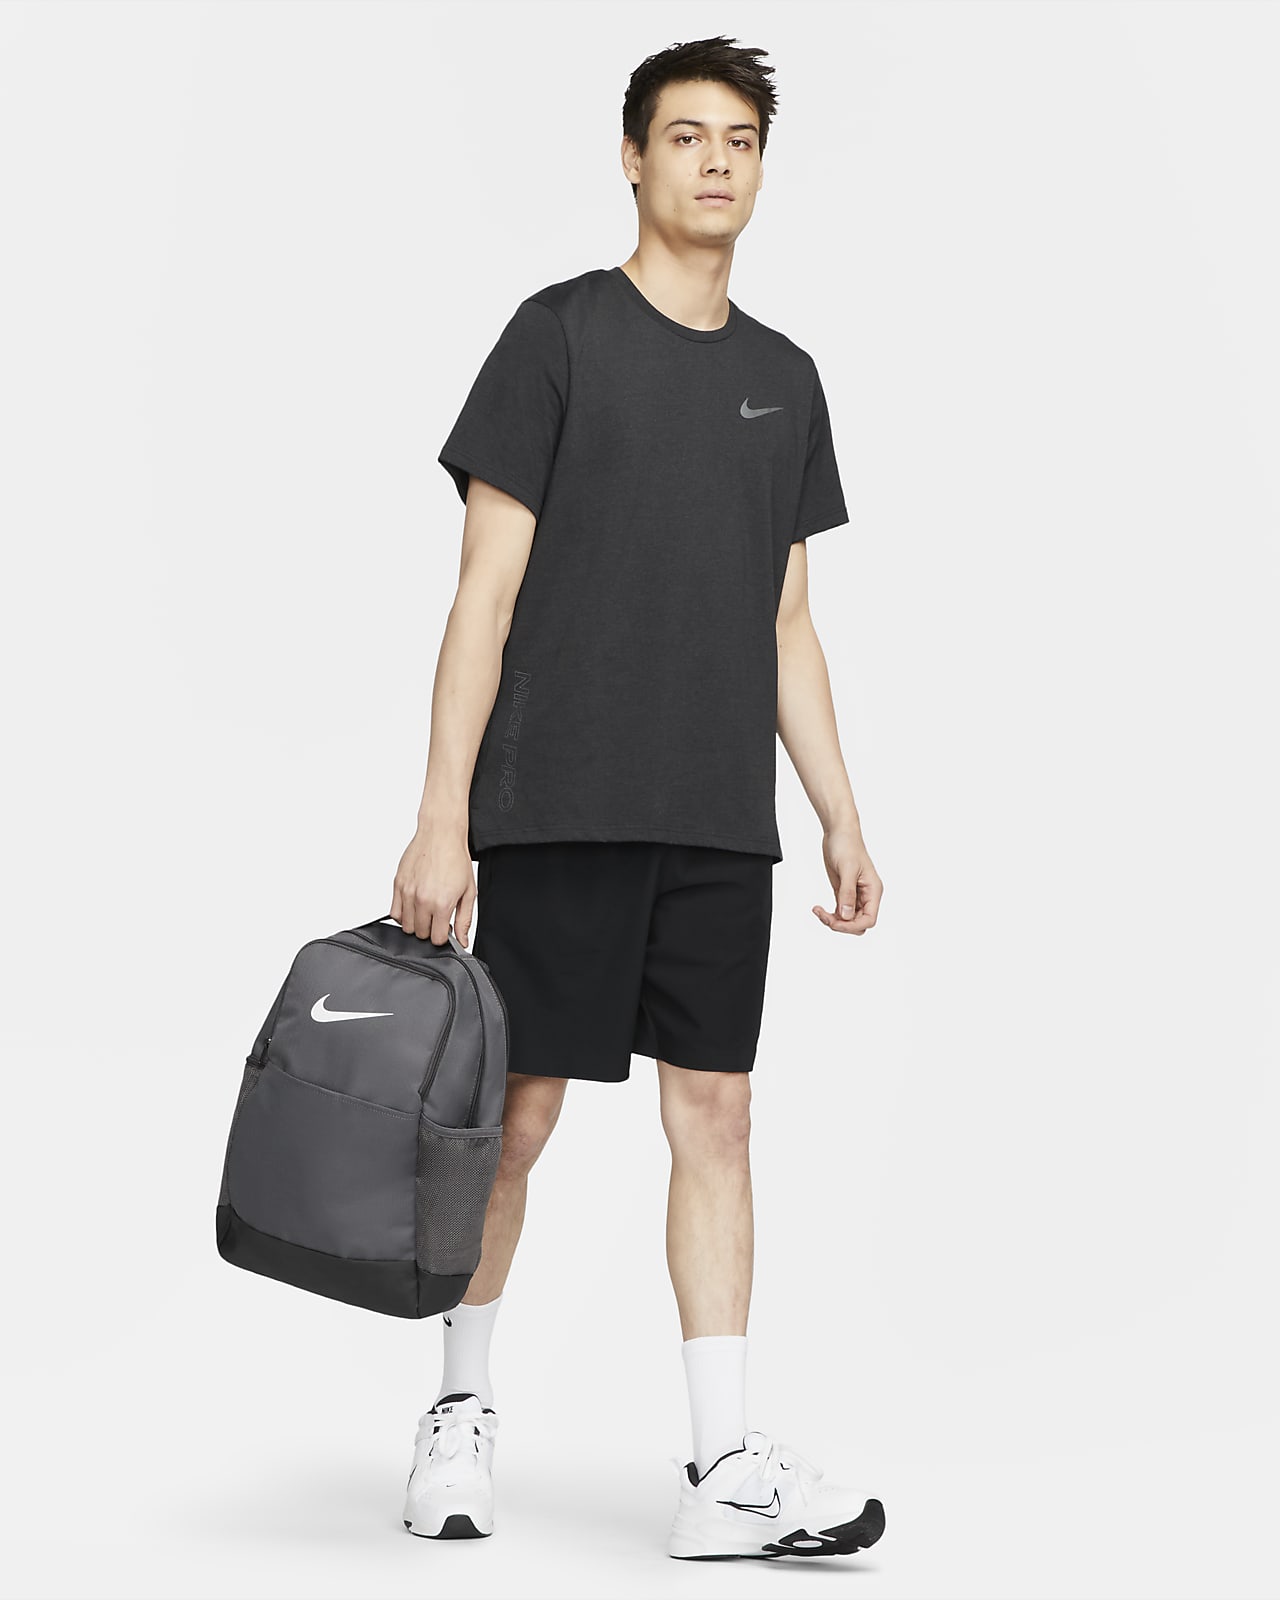 Nike Brasilia Medium Backpack NKDH7709